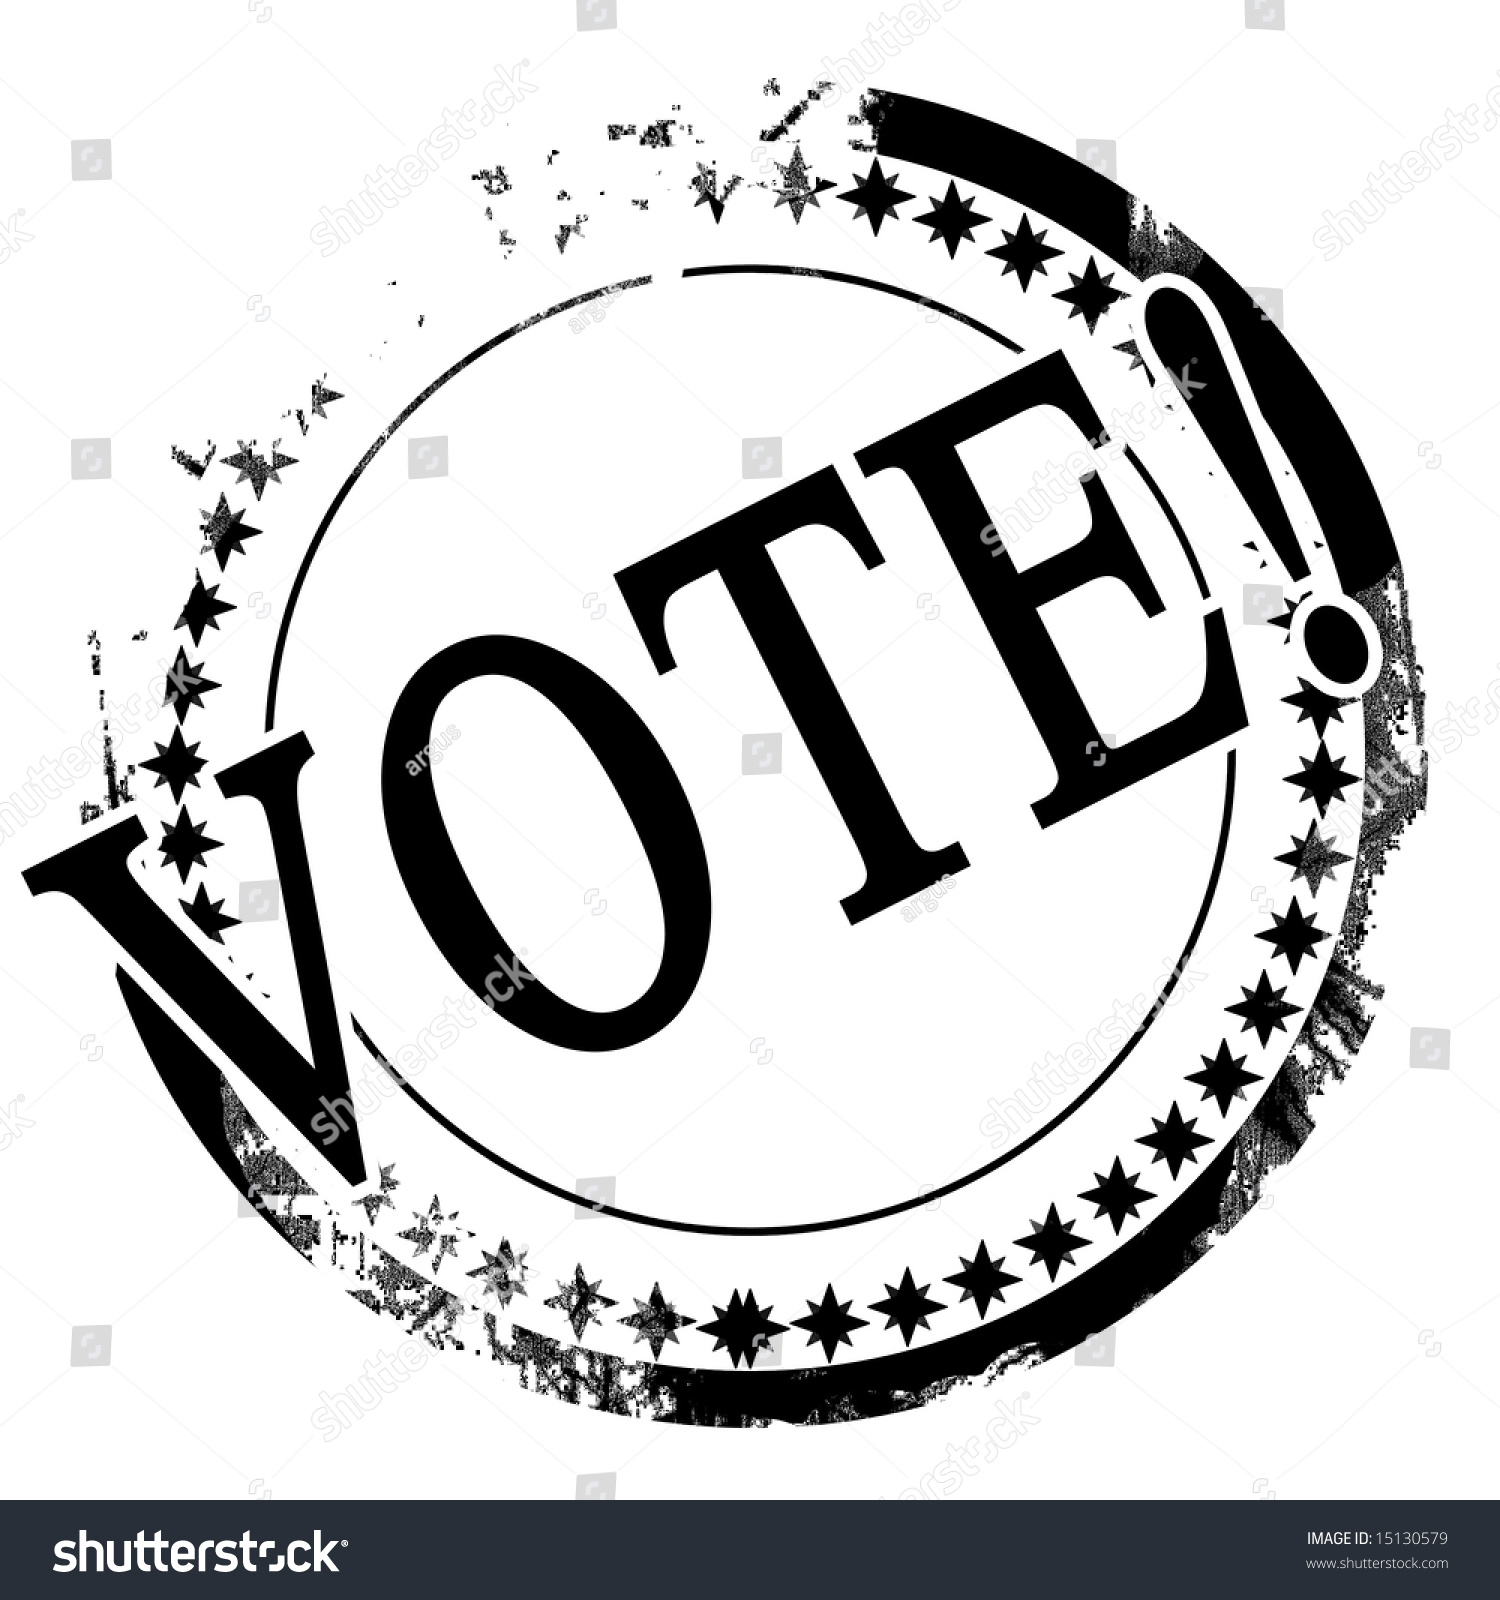 vote logos clip art - photo #36